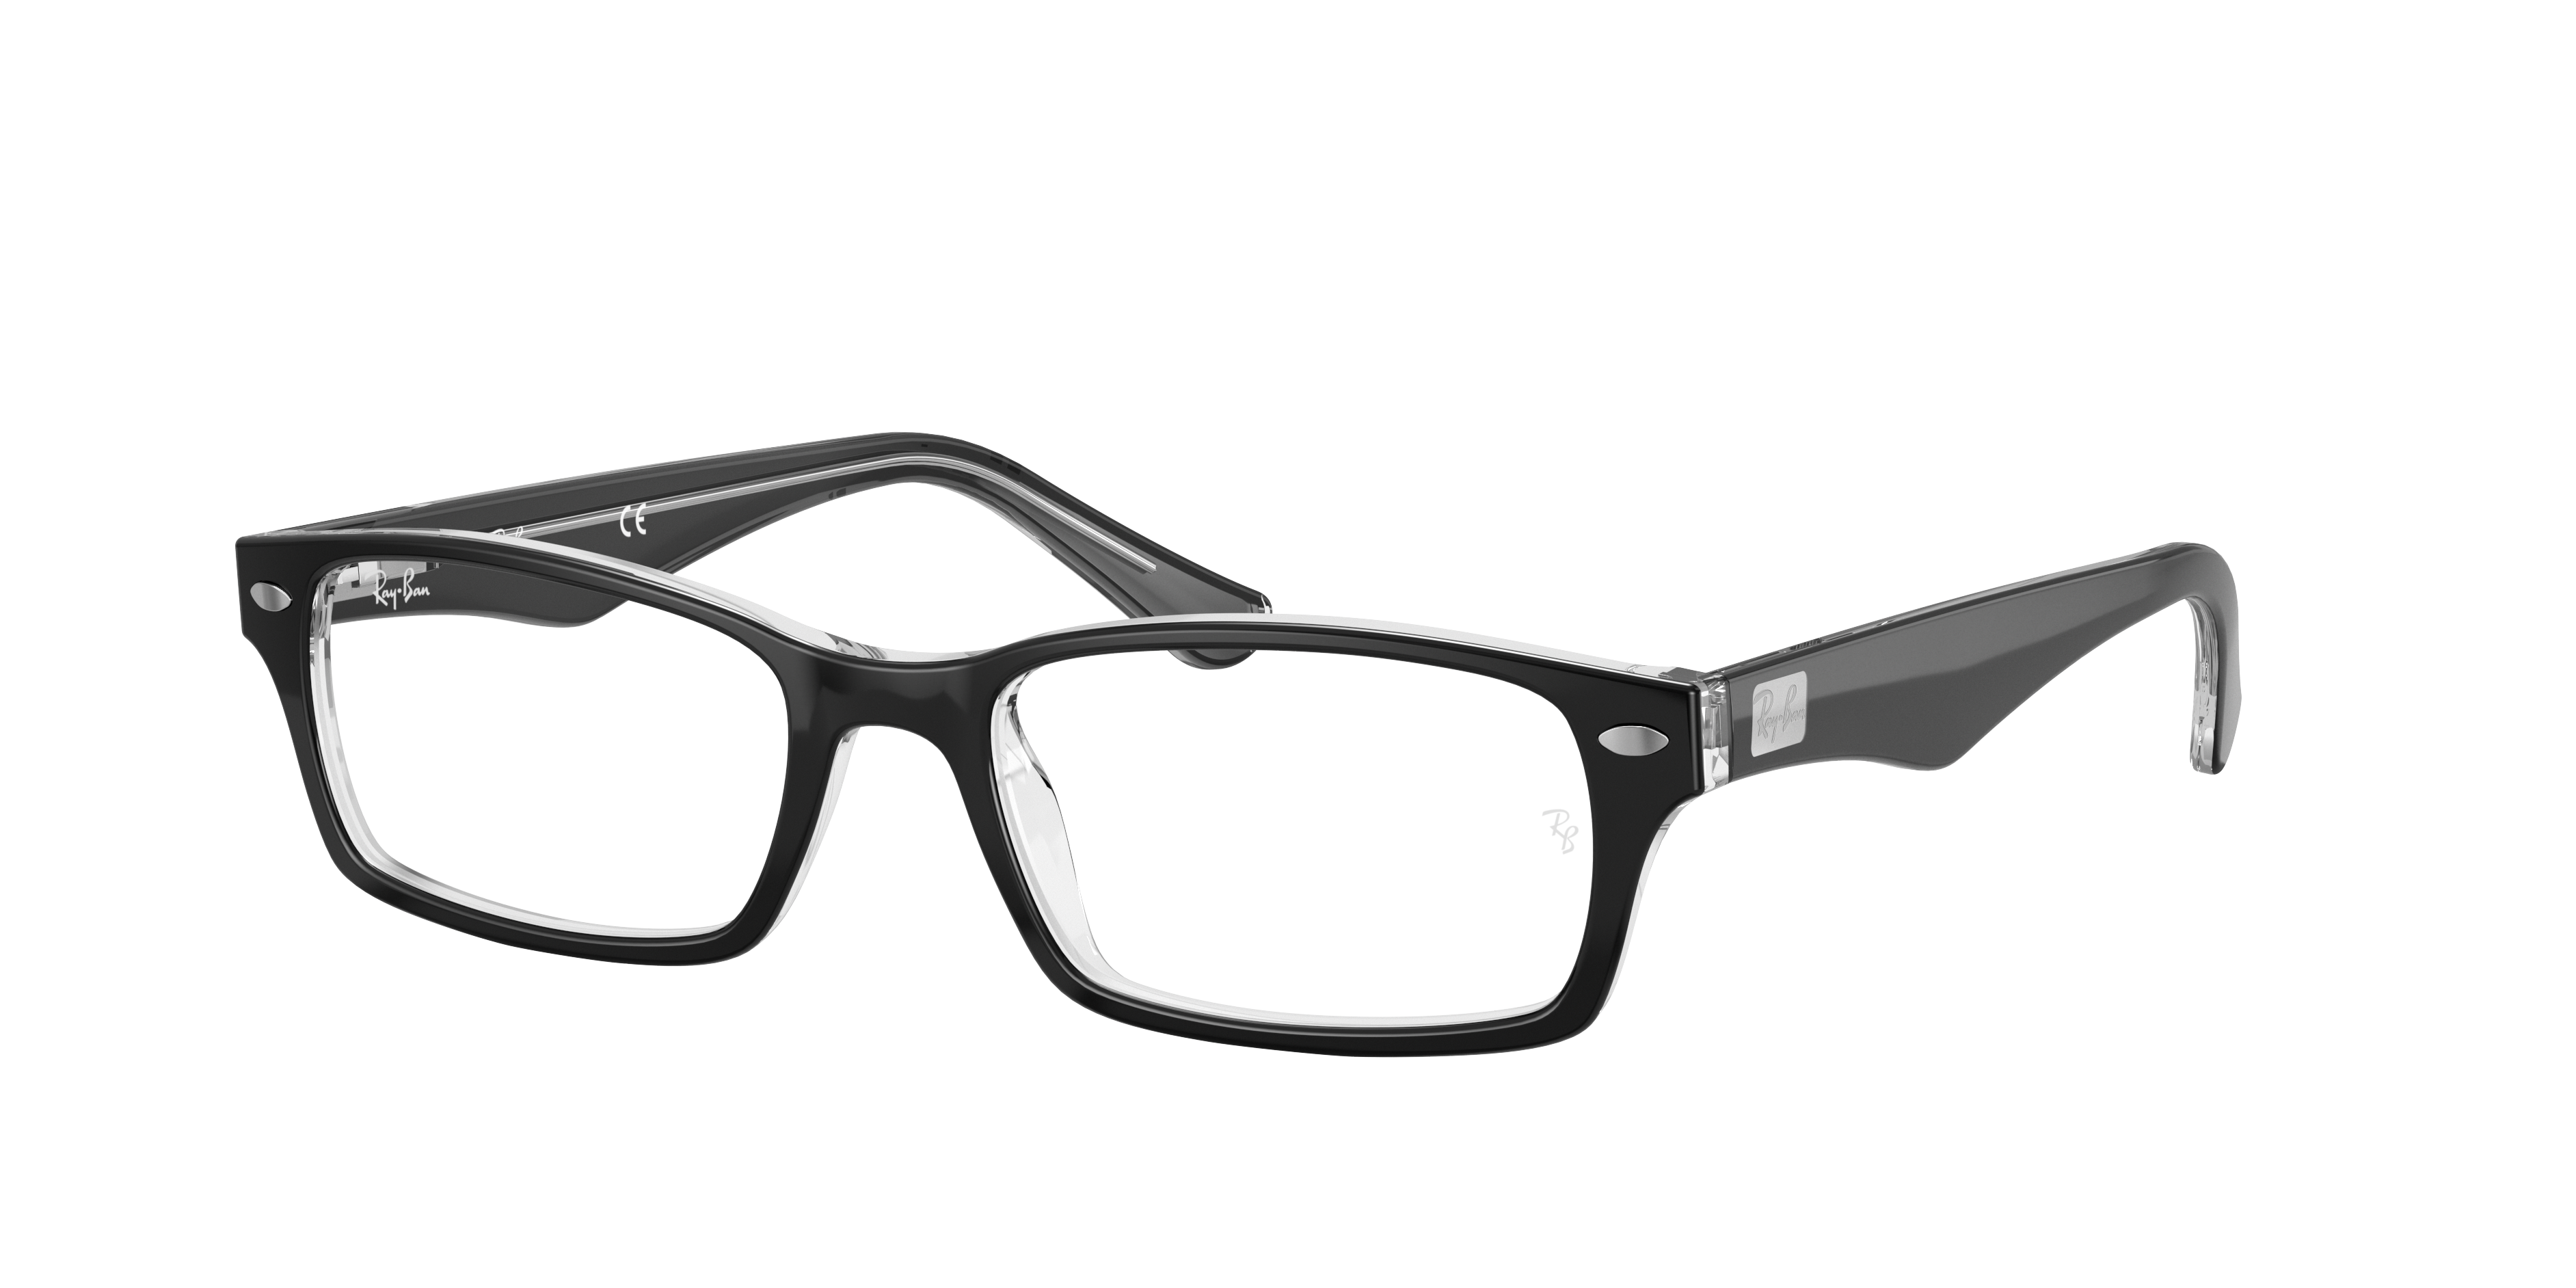 Ray-Ban RB5206 Optics Black On Transparent Eyeglasses | Glasses.com ...